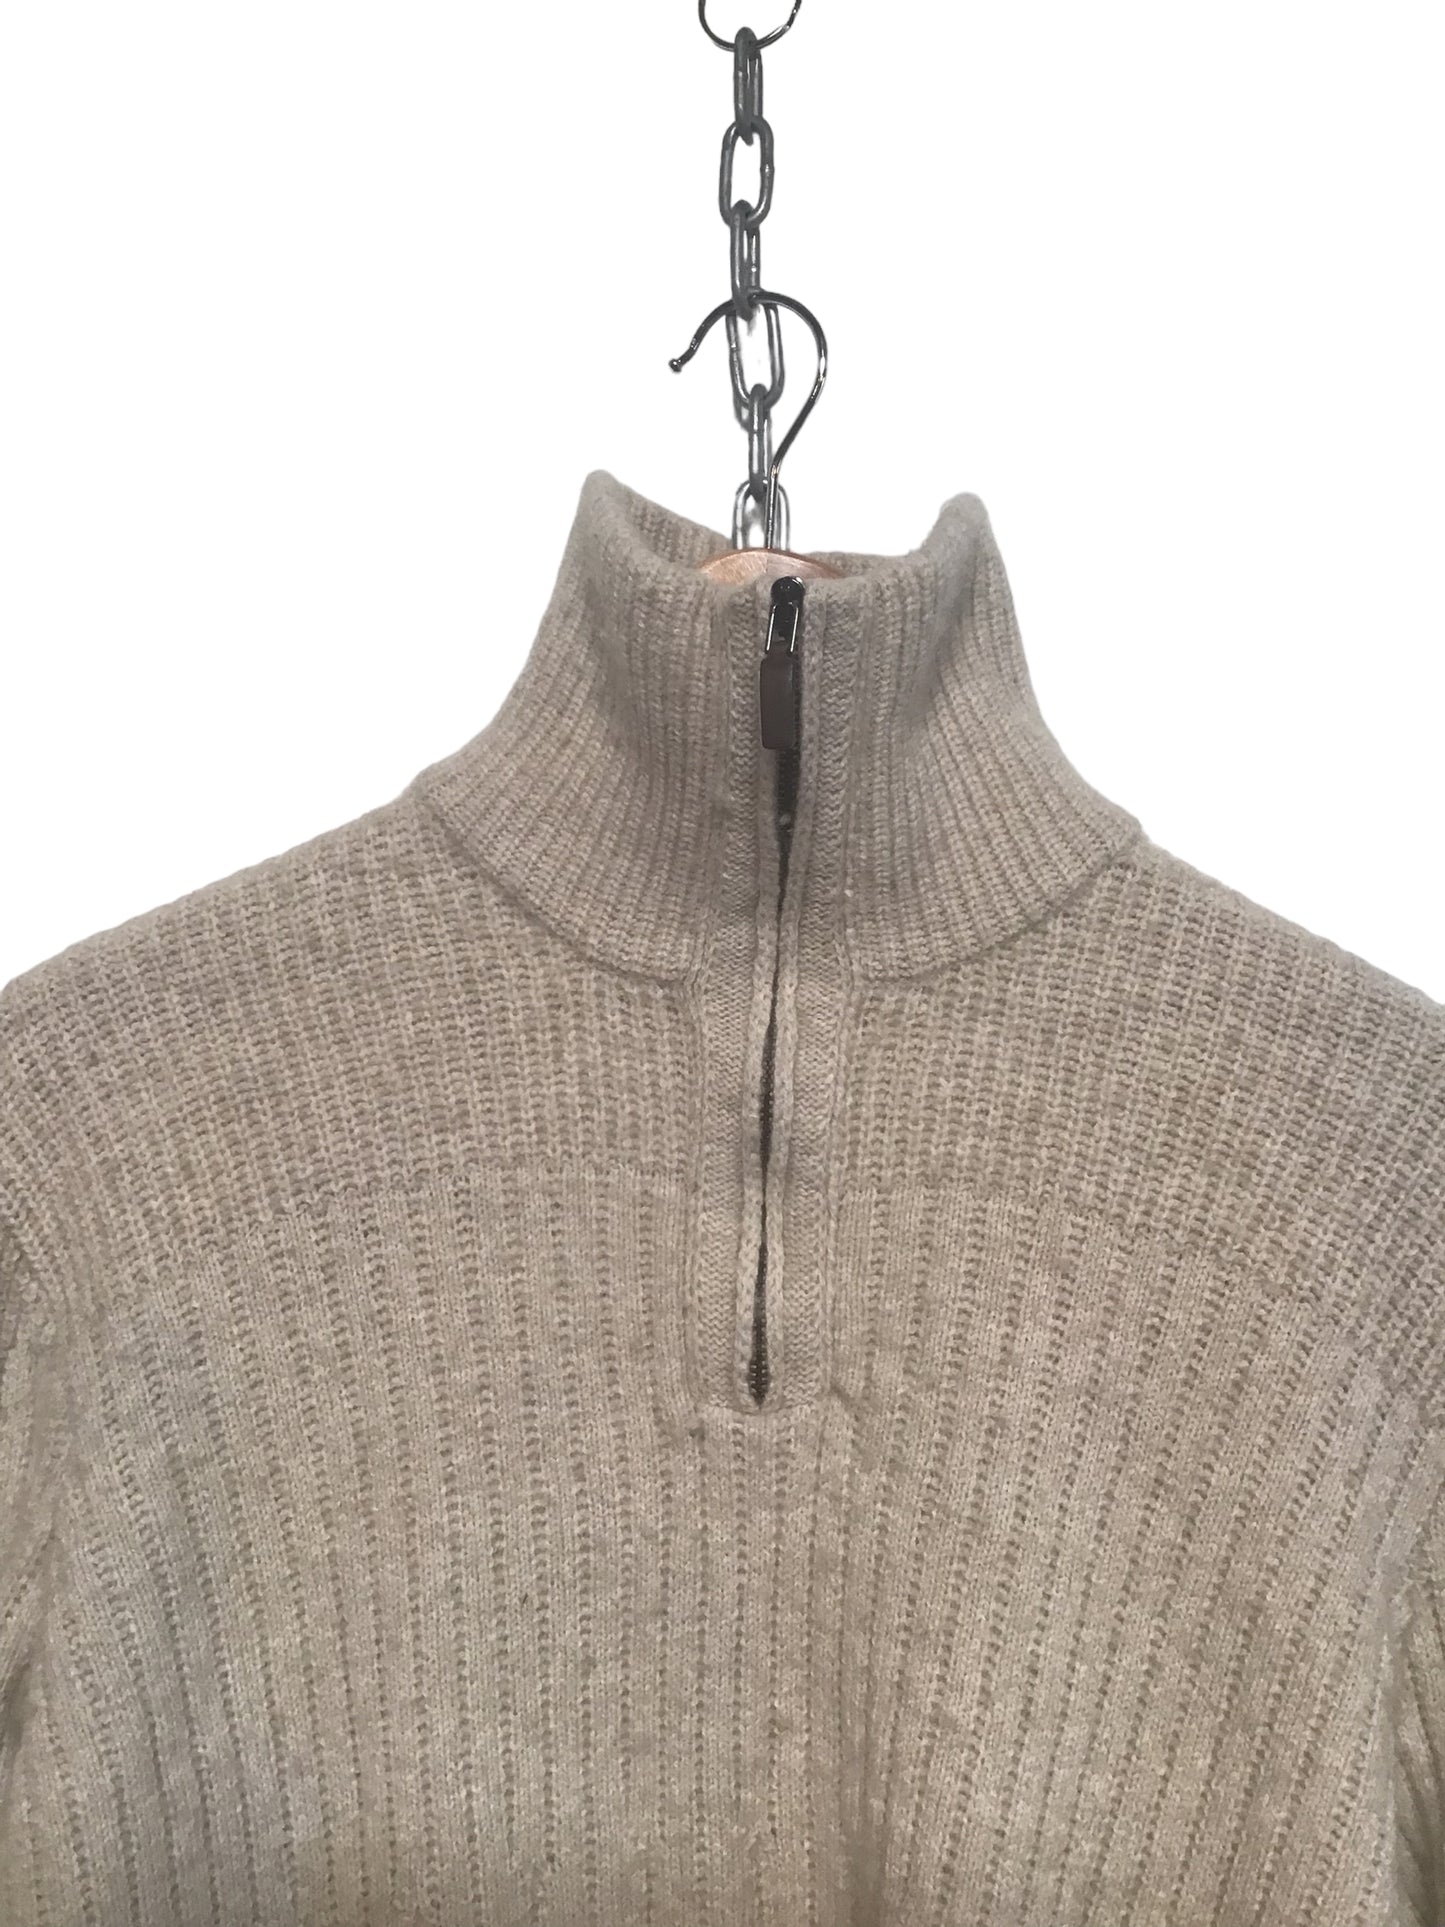 Hugo Boss Knitted Sweater (Size XL)